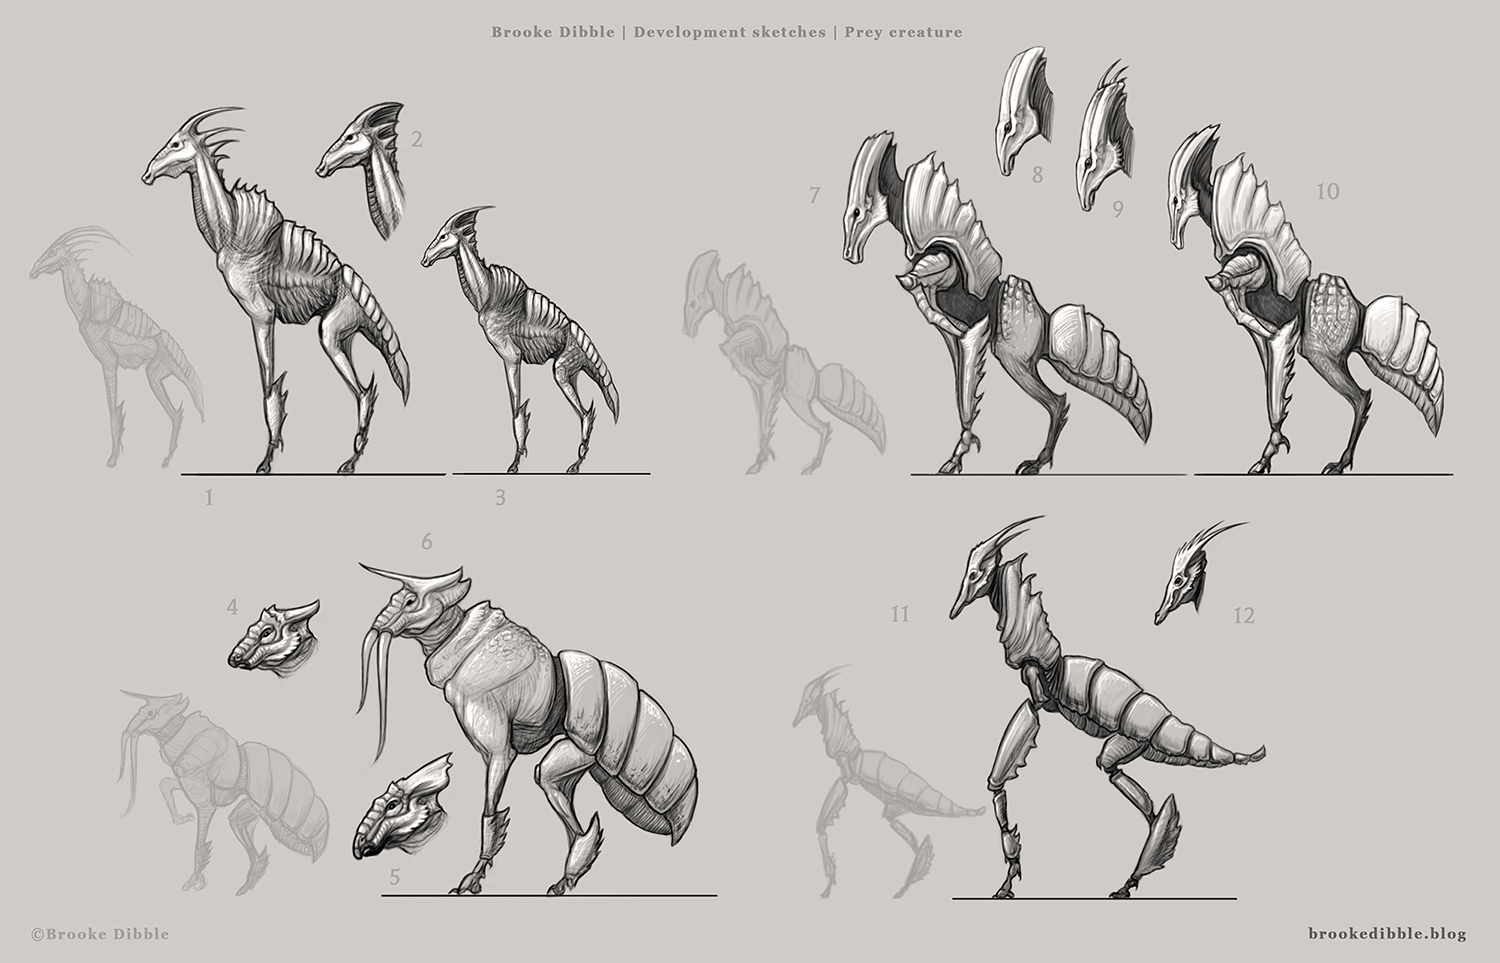 Creature design thumbnail sketches